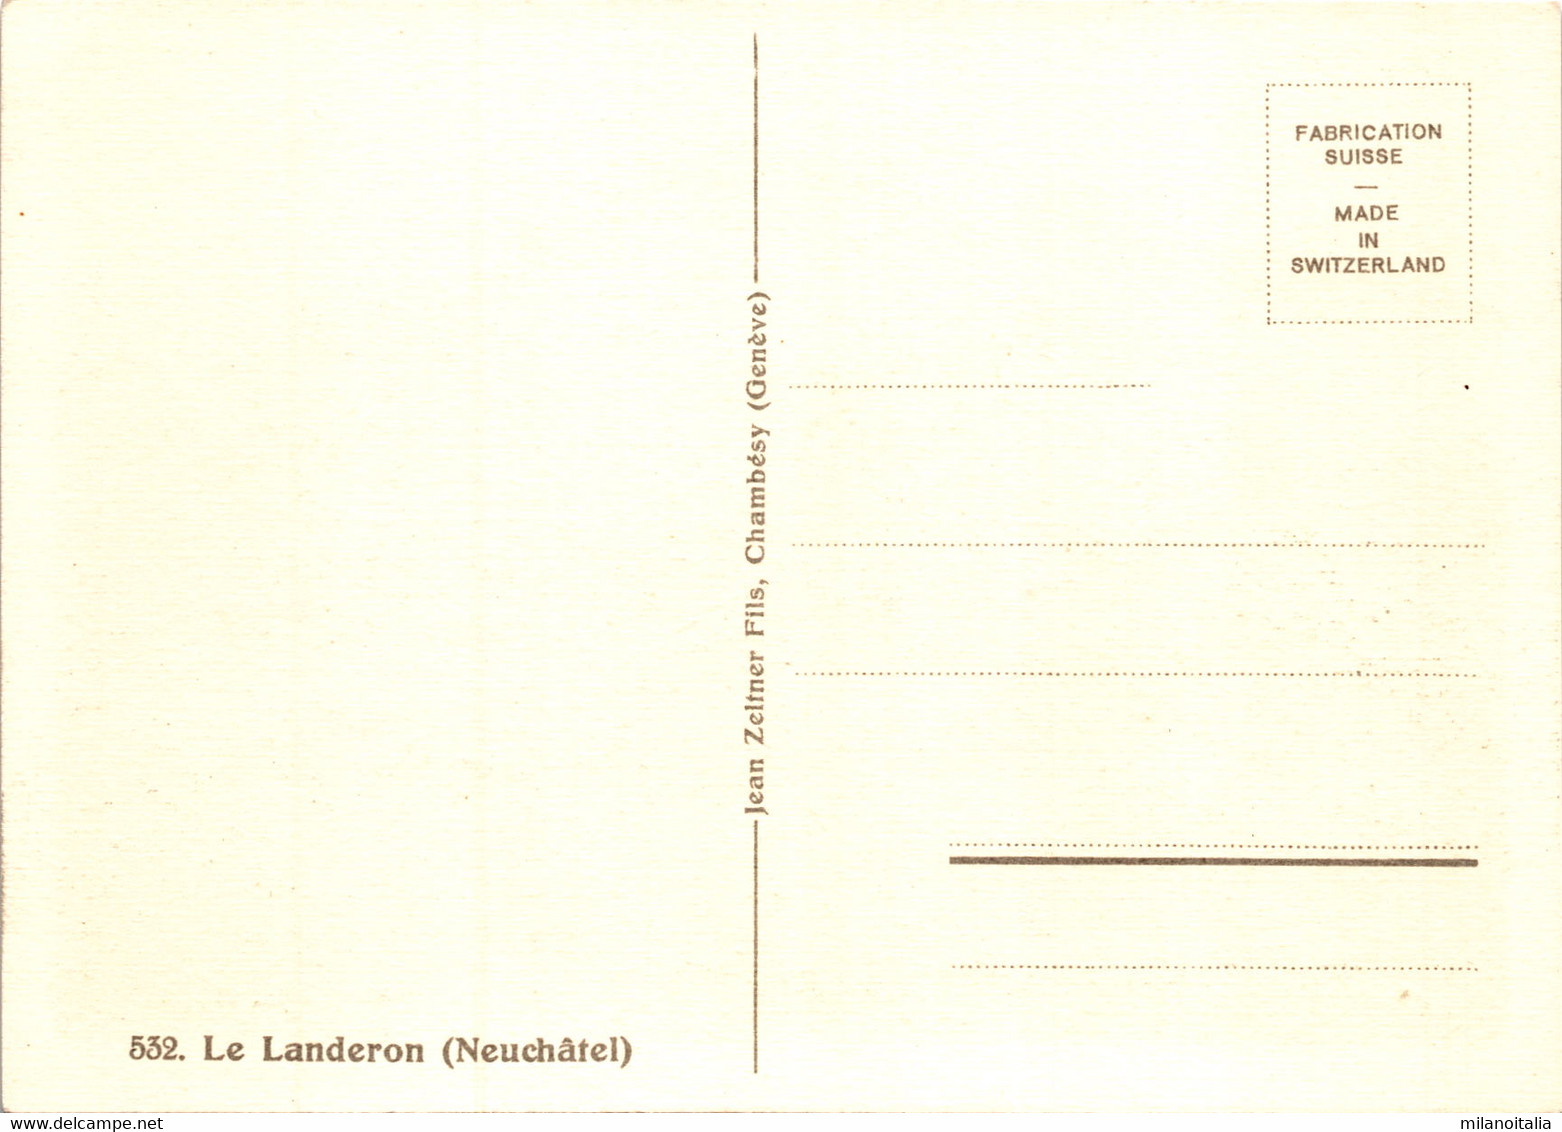 Le Landeron (Neuchatel) (532) - Le Landeron